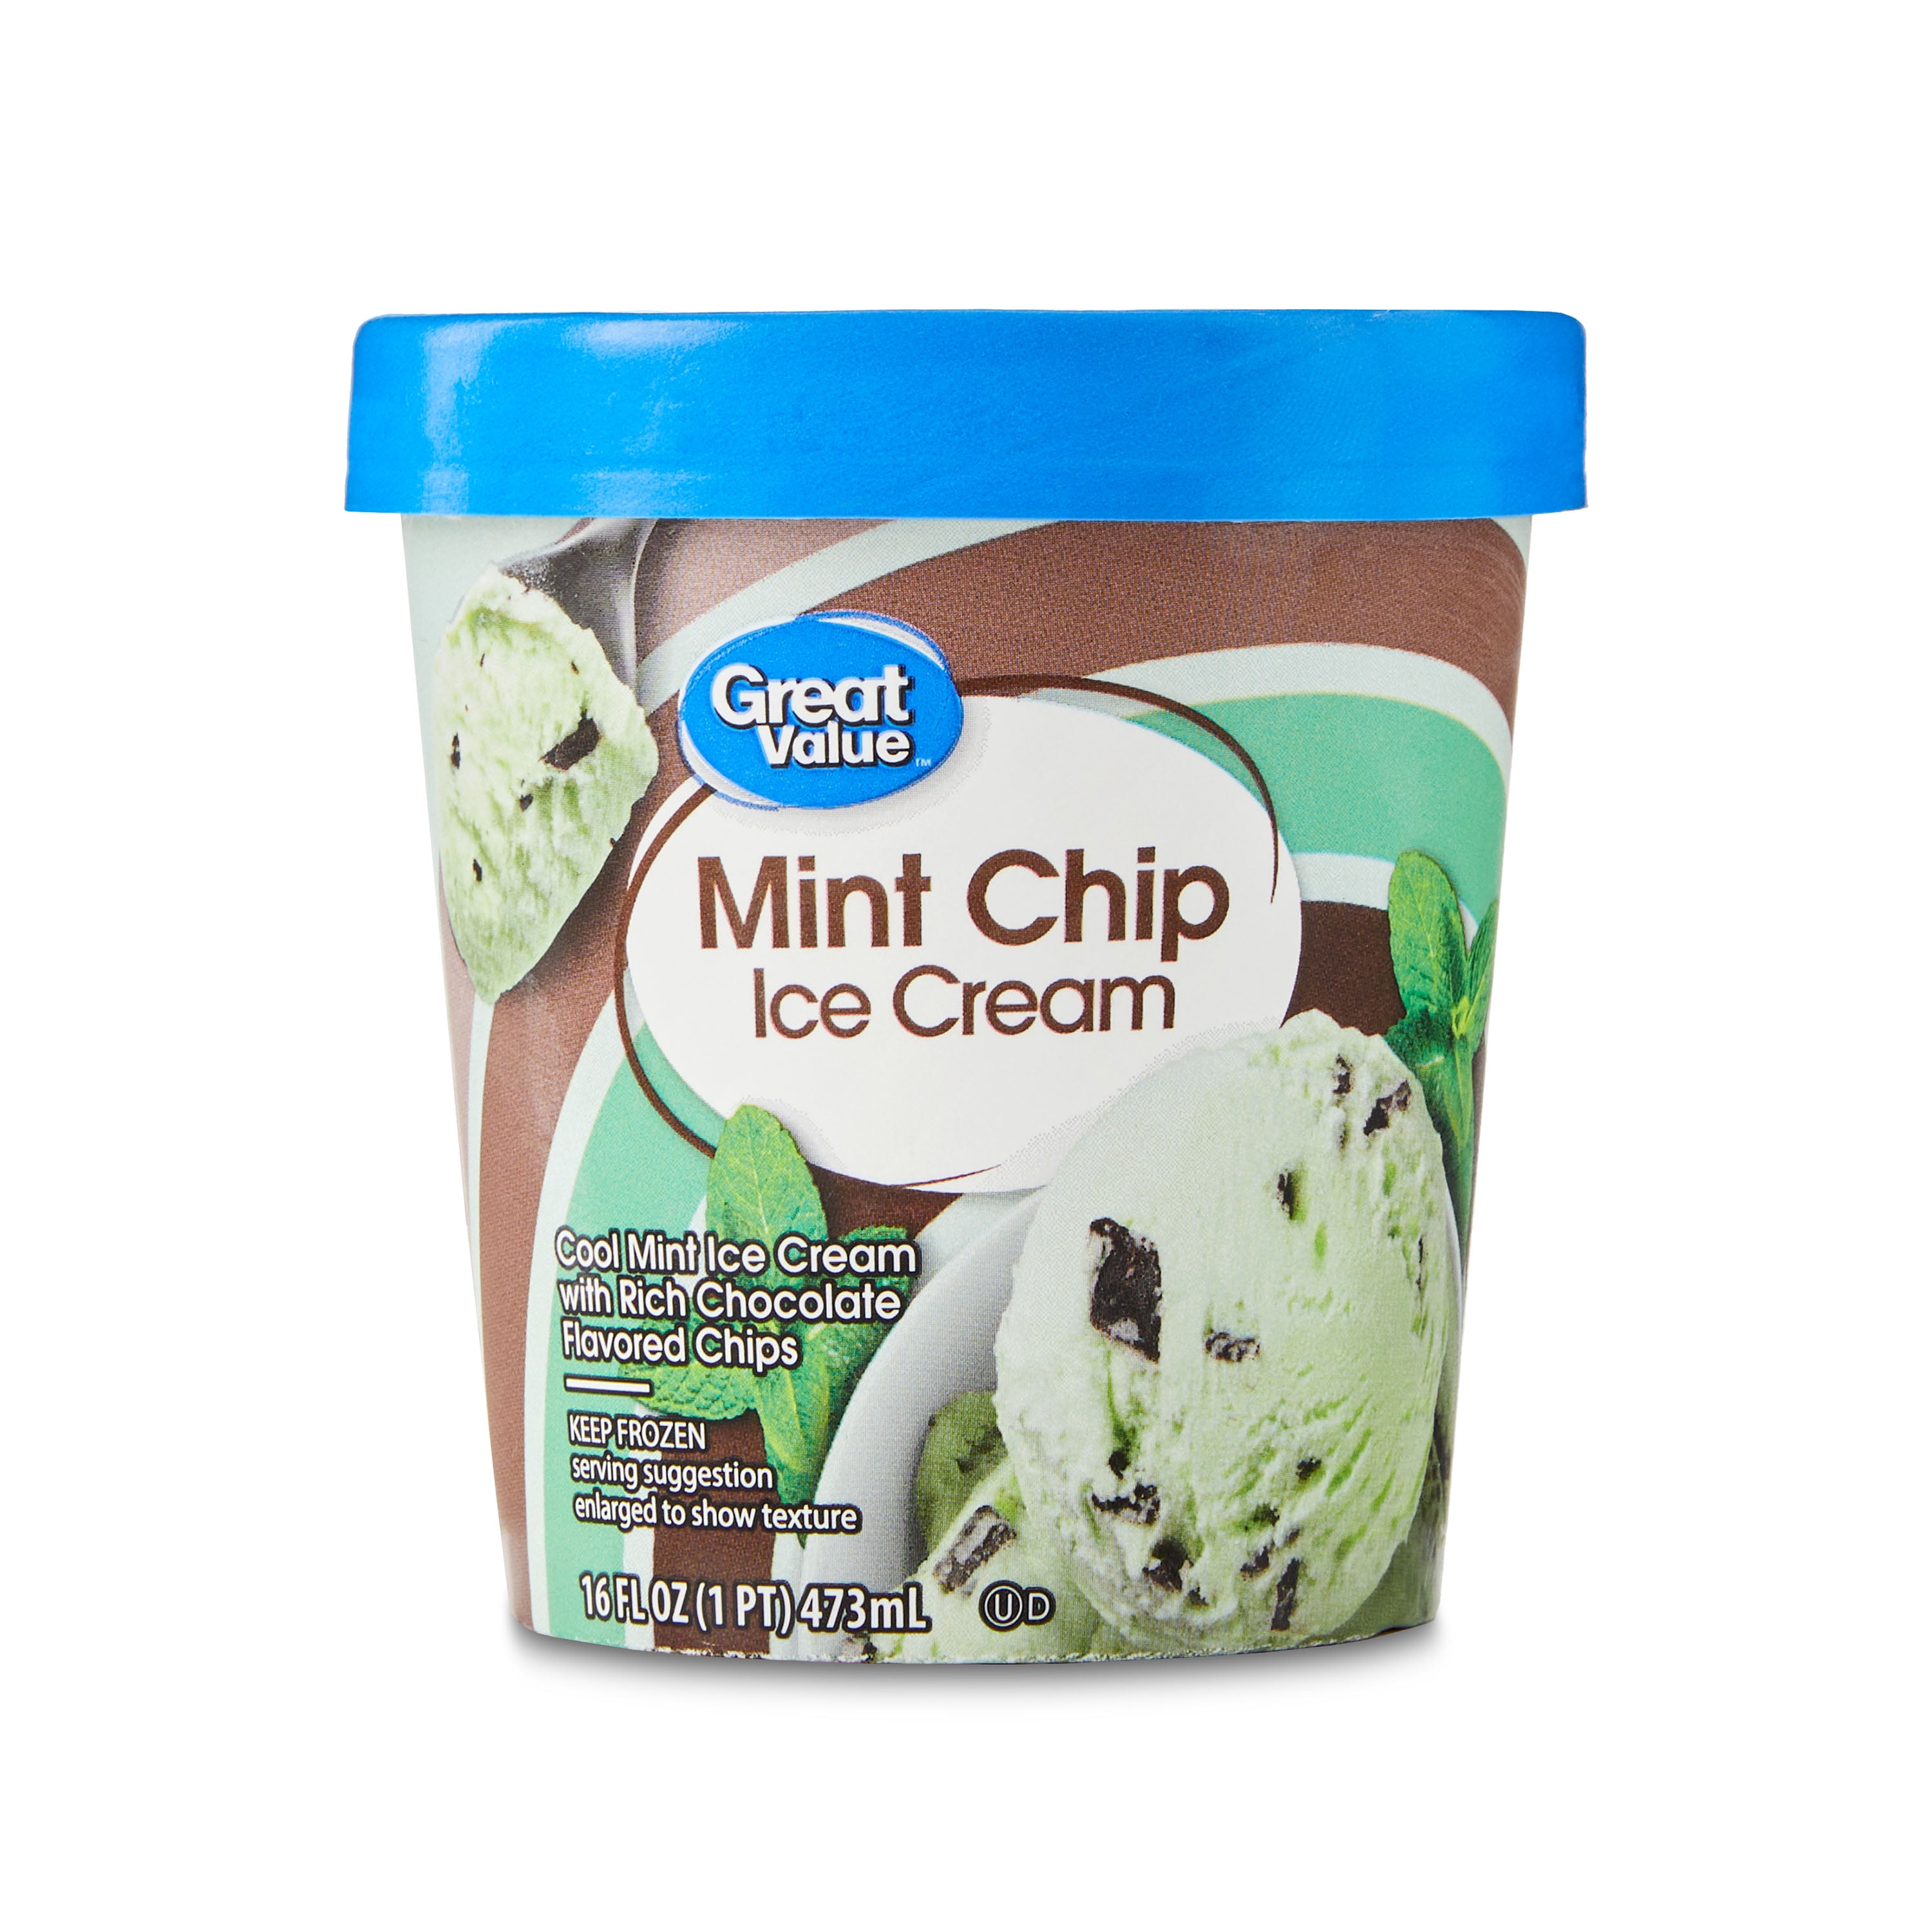 Great Value Mint Chip Ice Cream 16 Fl Oz